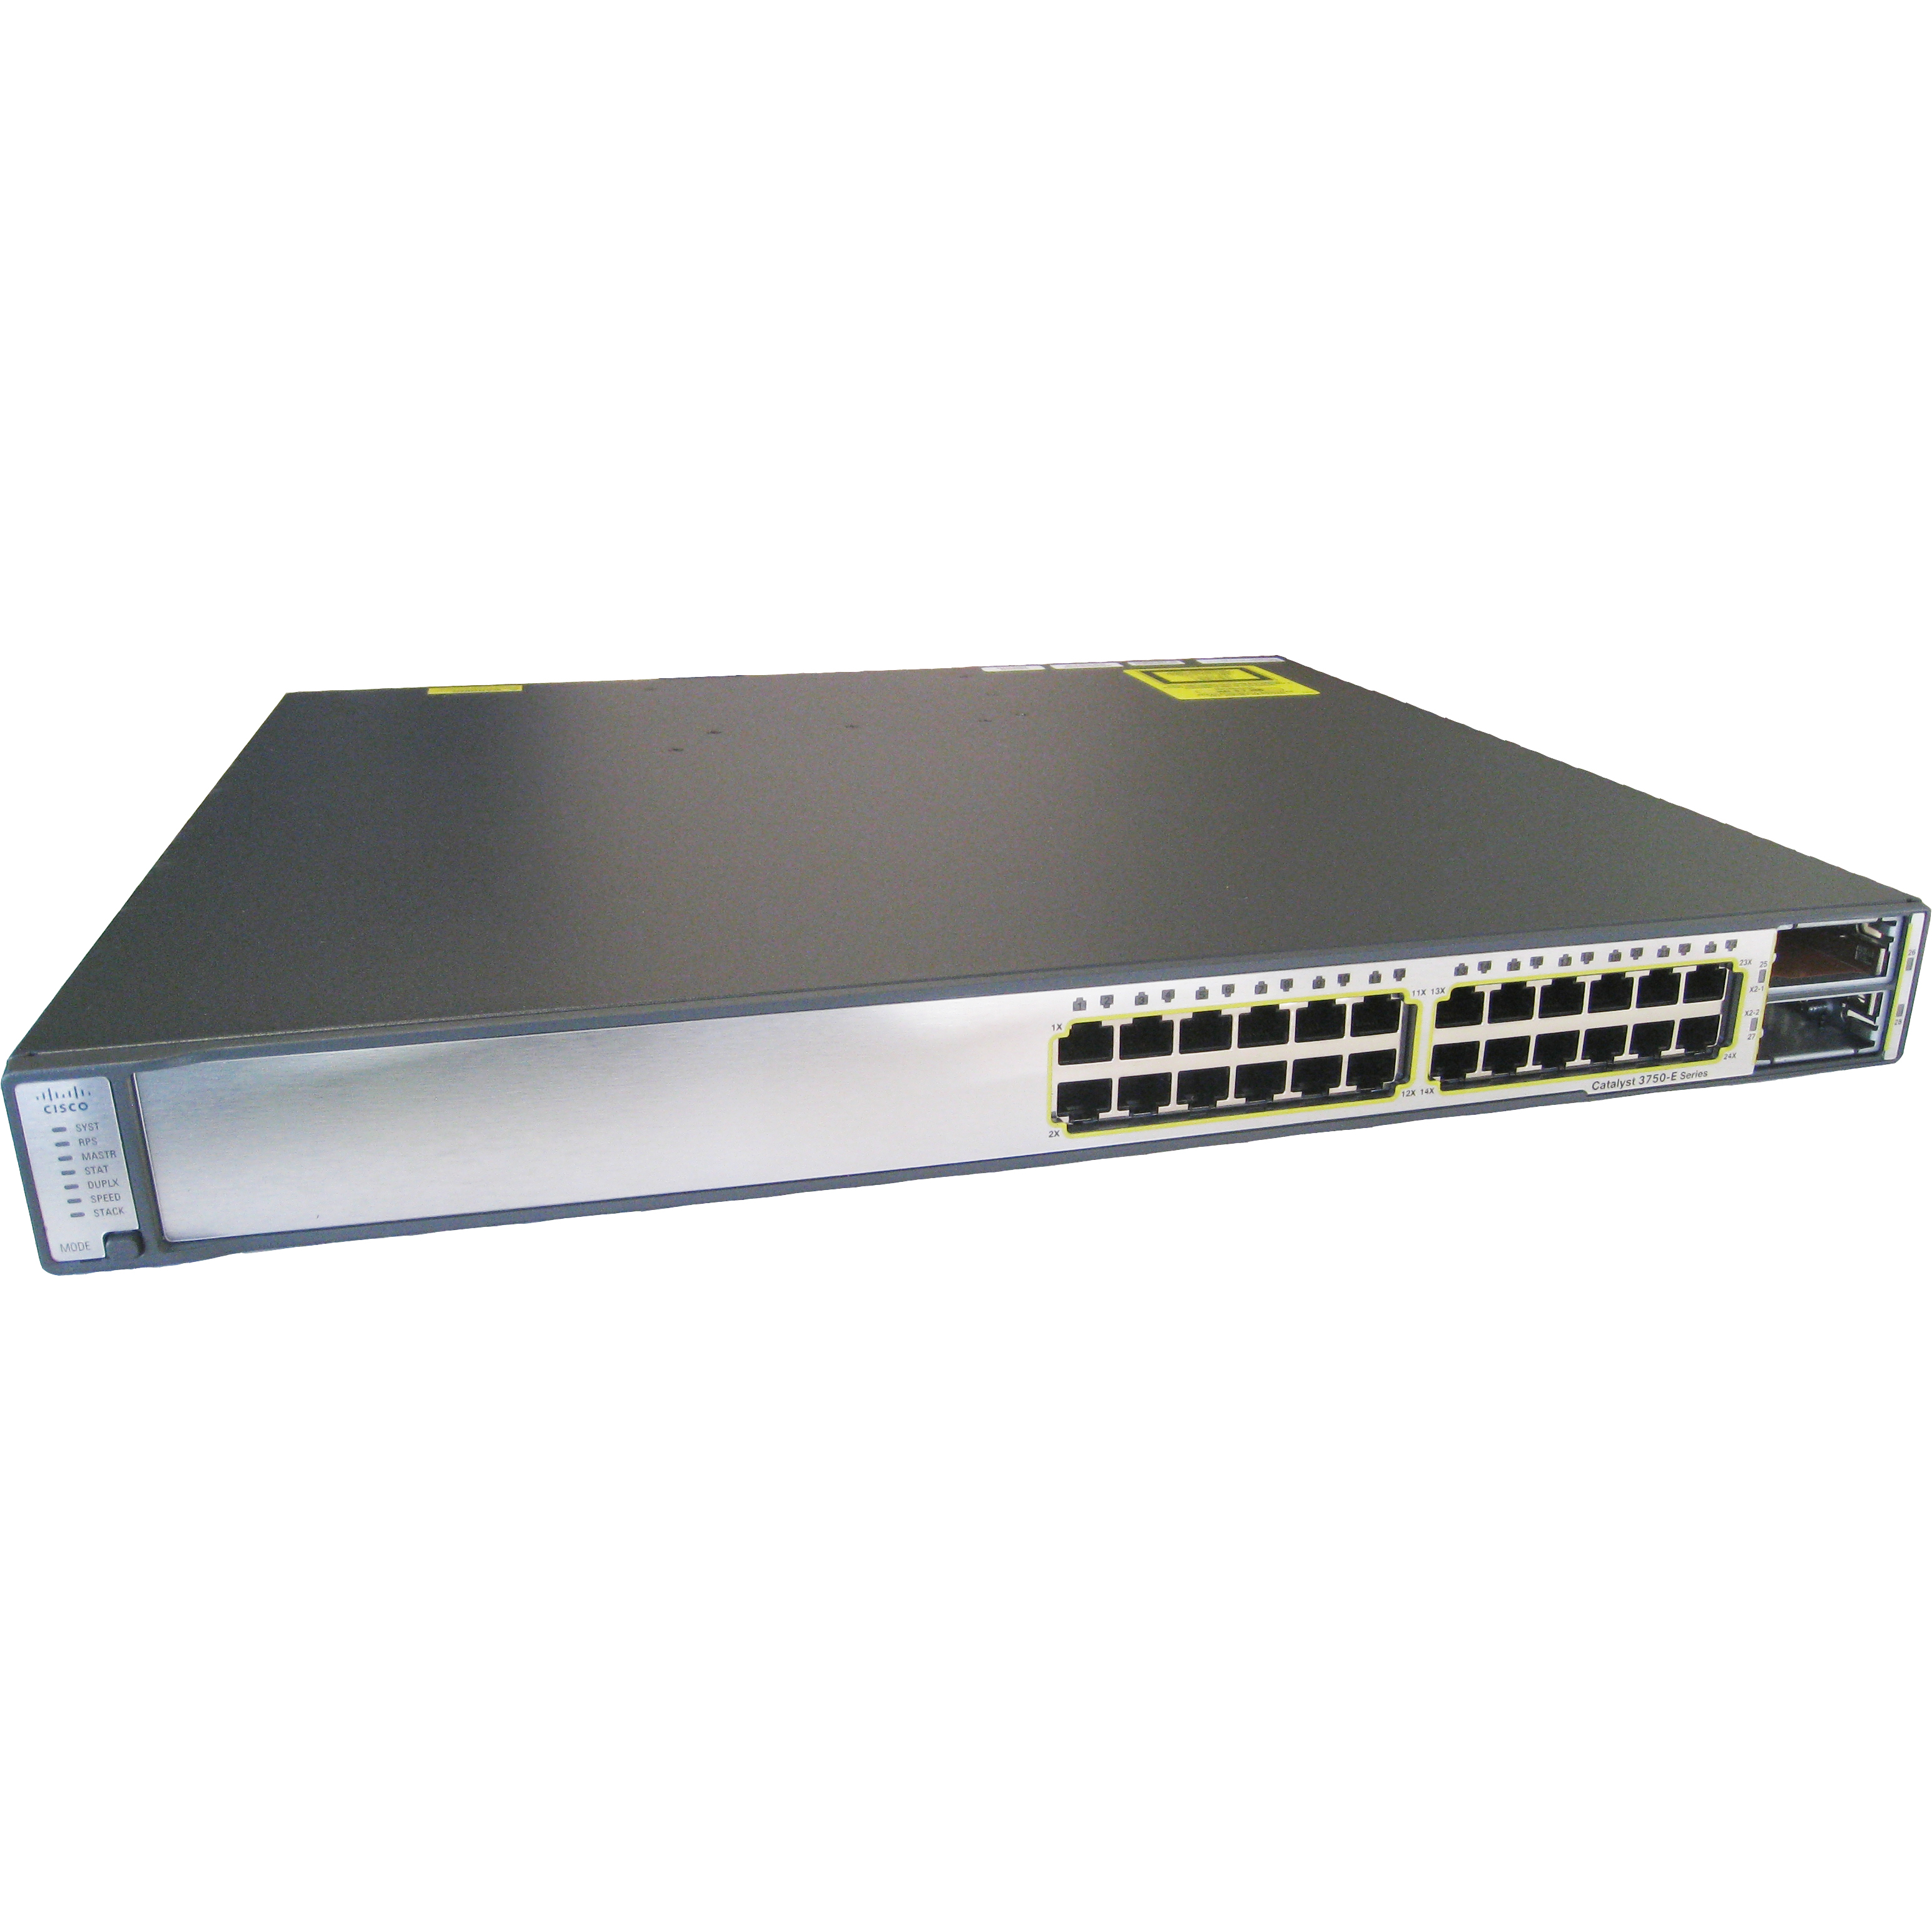 Cisco WS-C3750E-24TD-SD